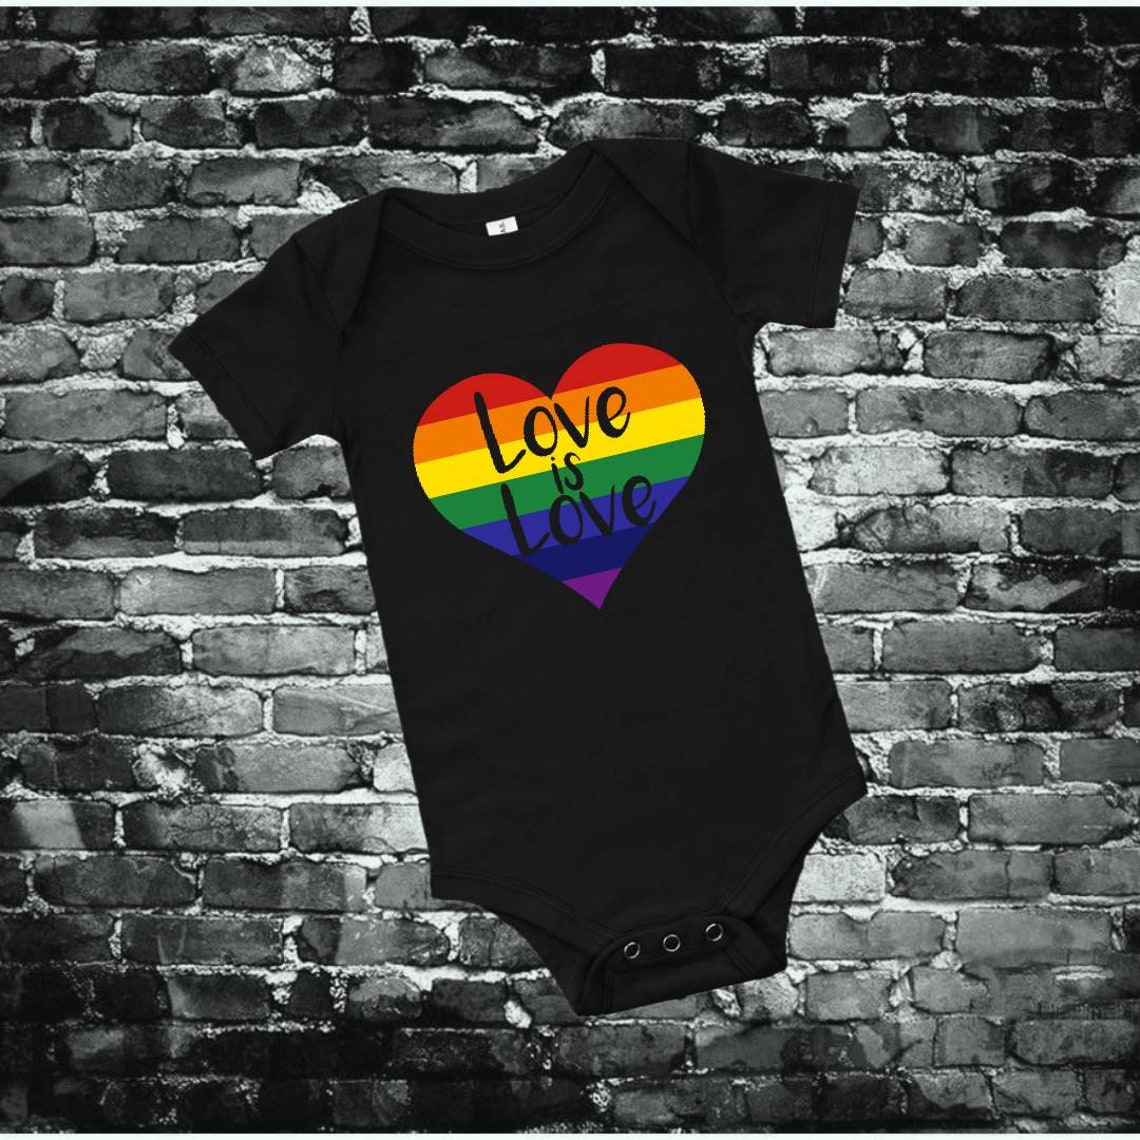 Love is Love Baby Onesie® Baby Pride LGBTQ Pride Baby One | Etsy